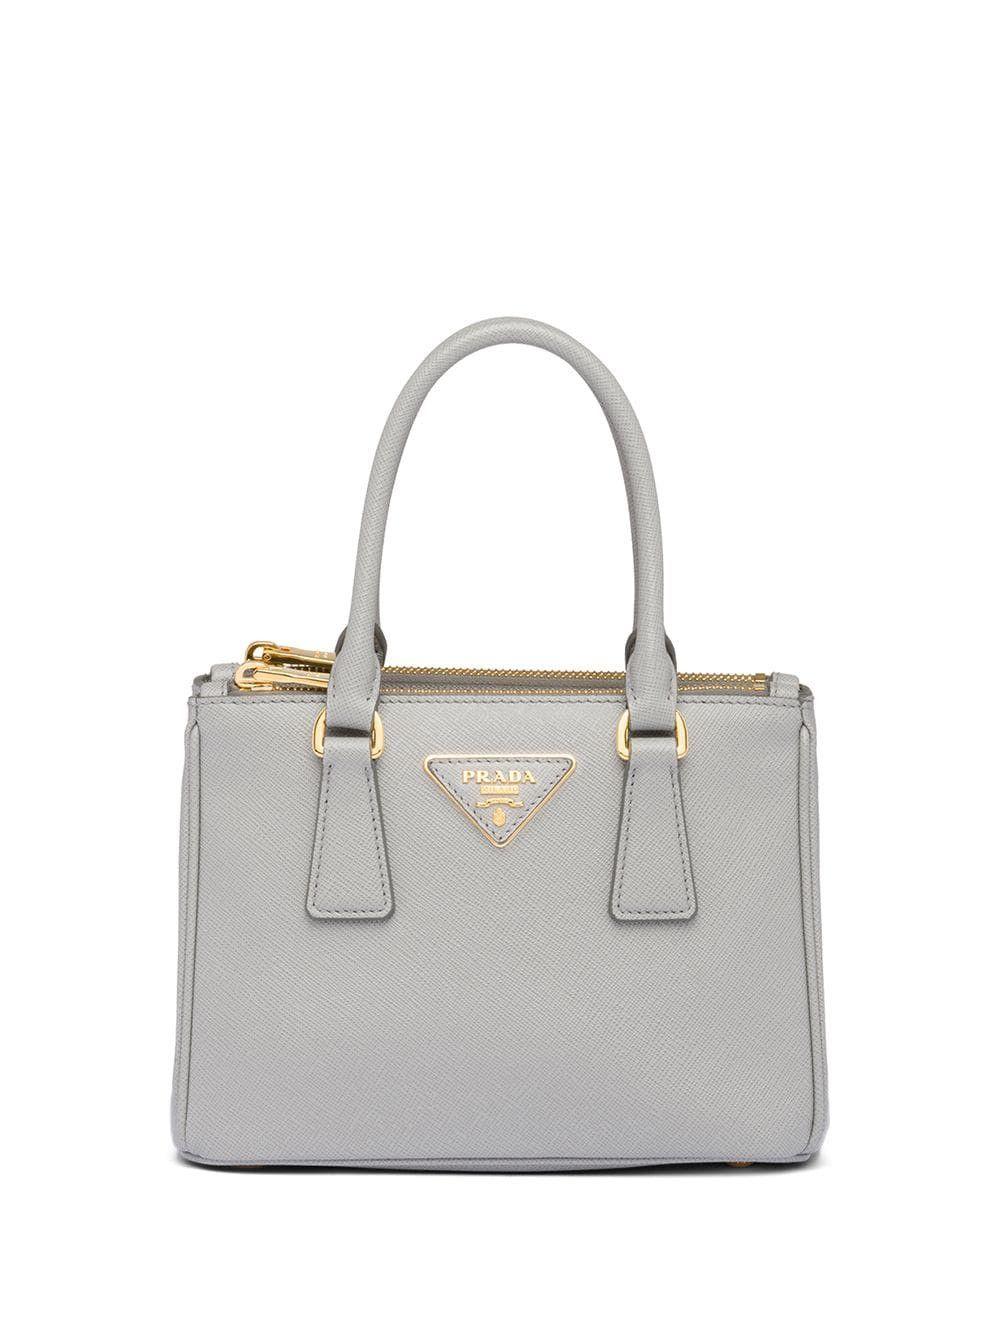 Prada Galleria Saffiano Leather Mini Bag in Grey | Lyst Canada